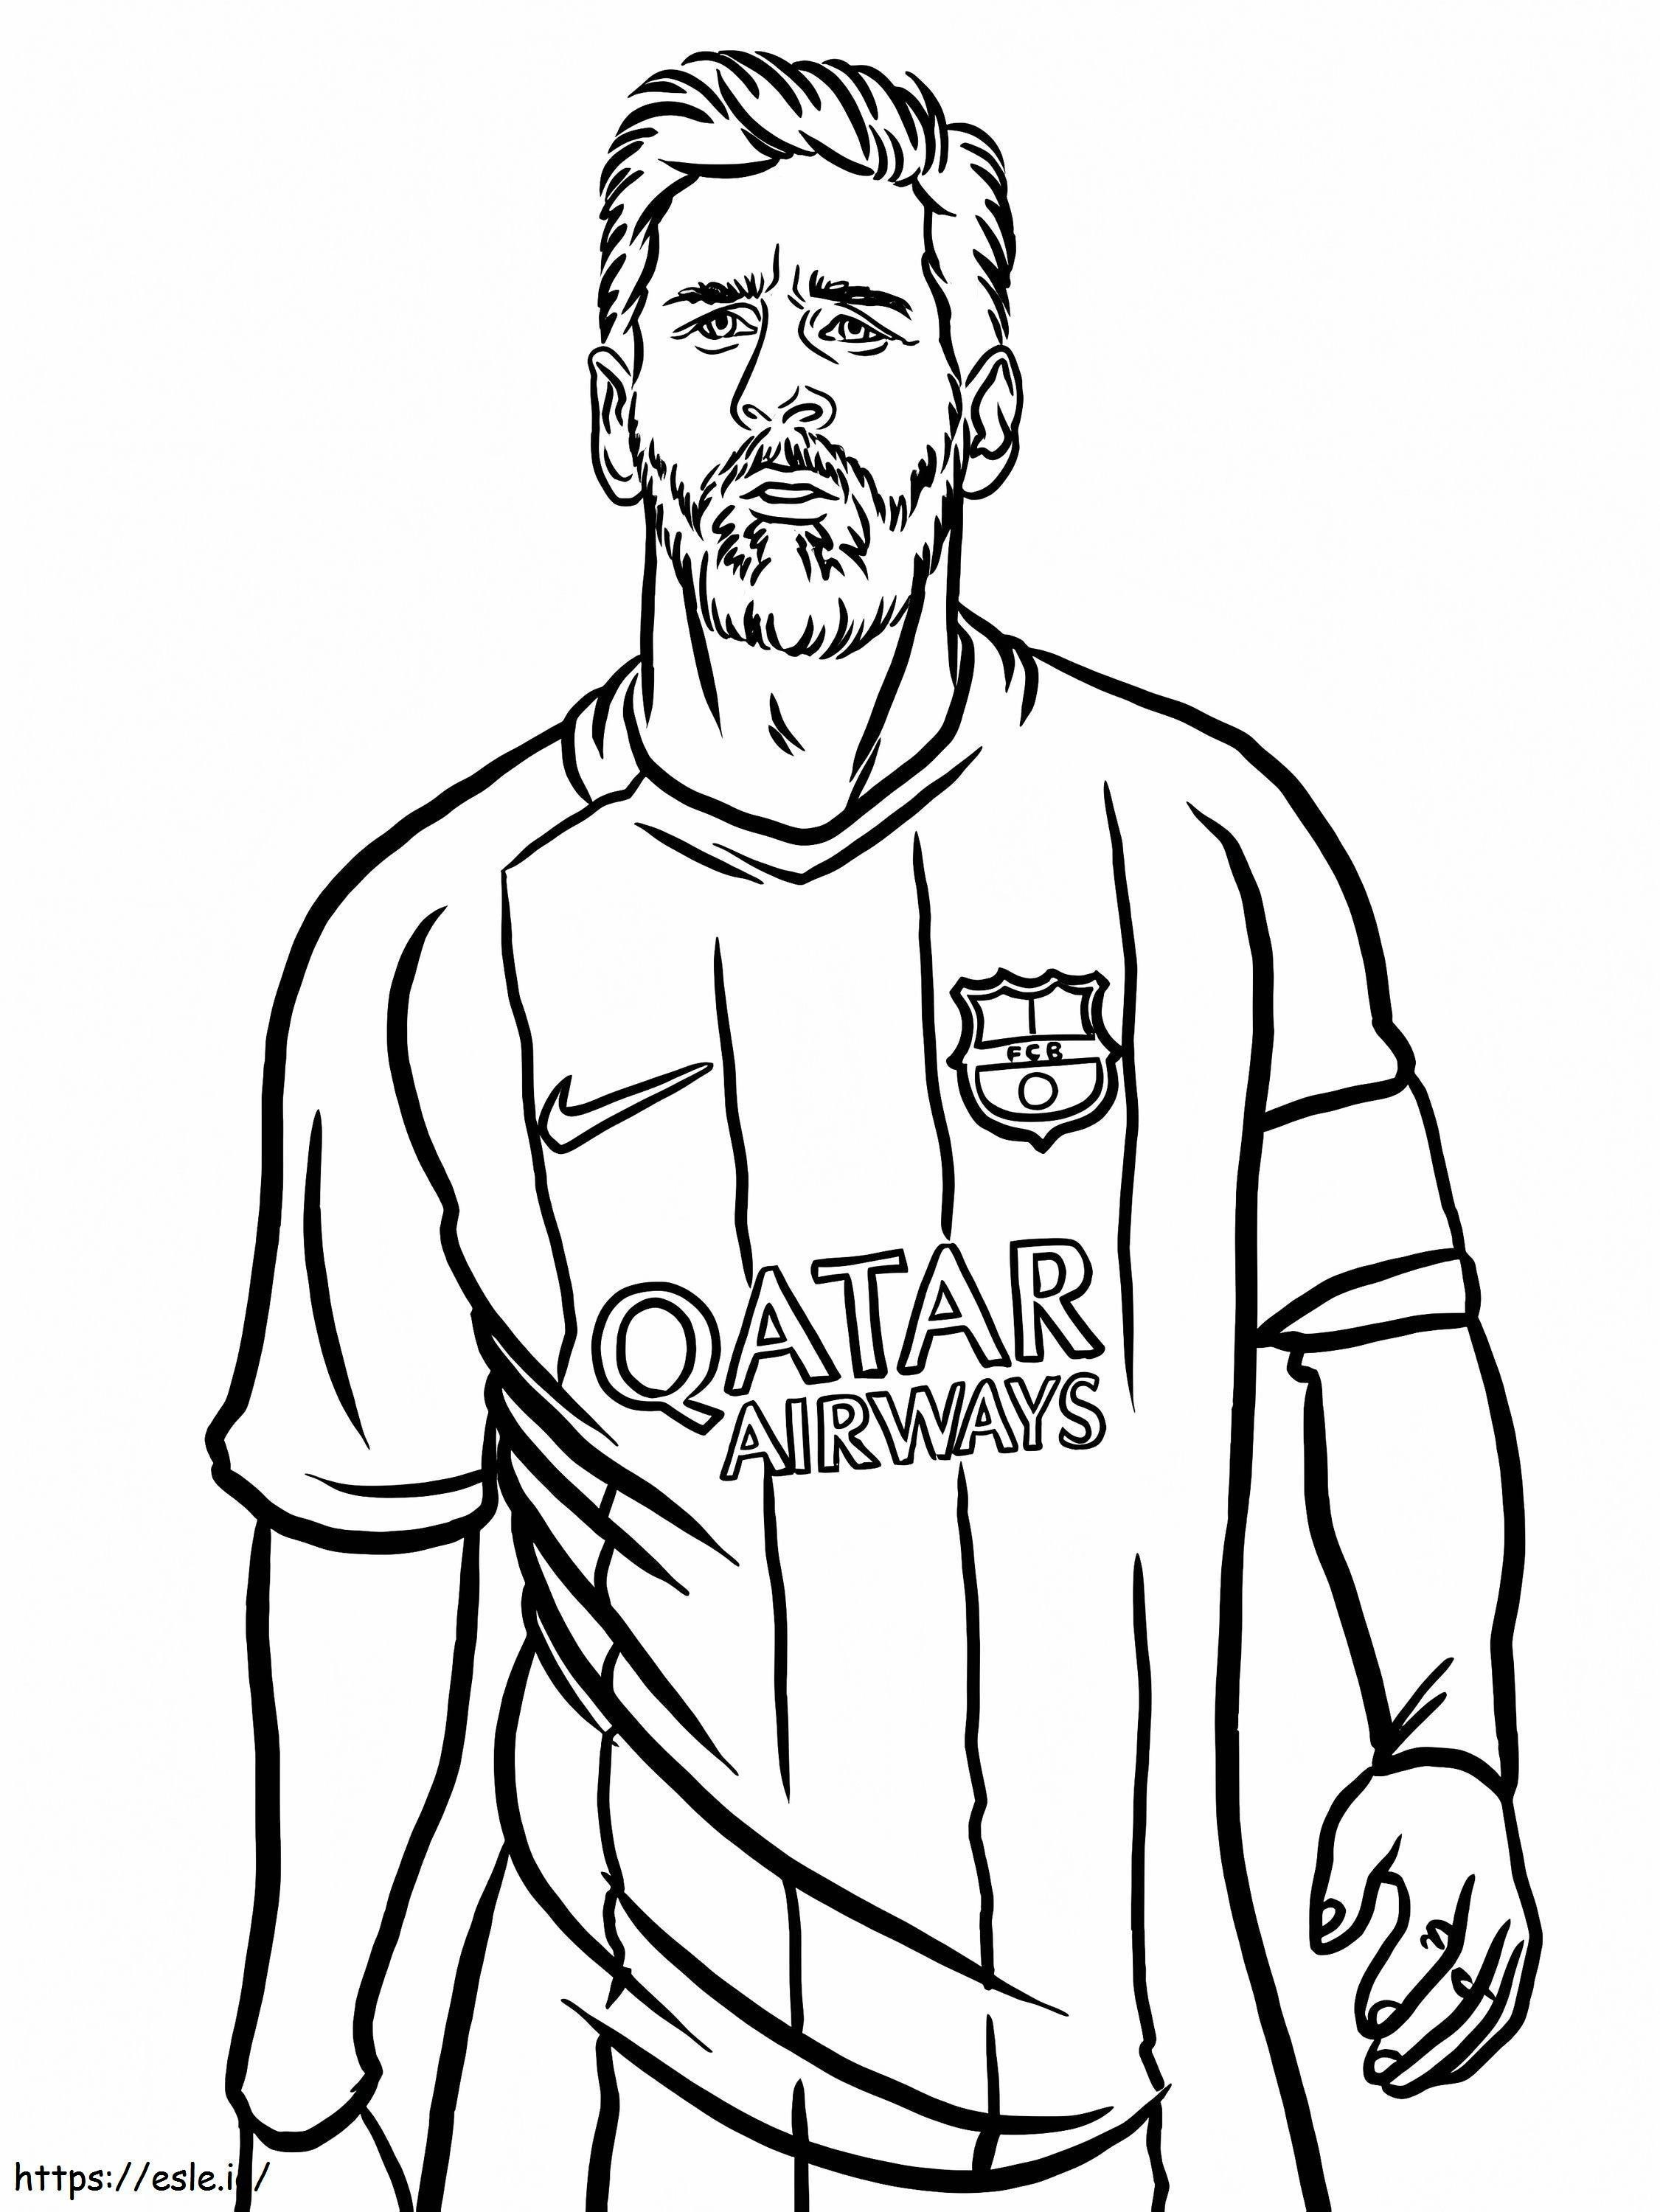 Lionel Messi'nin Portresi boyama